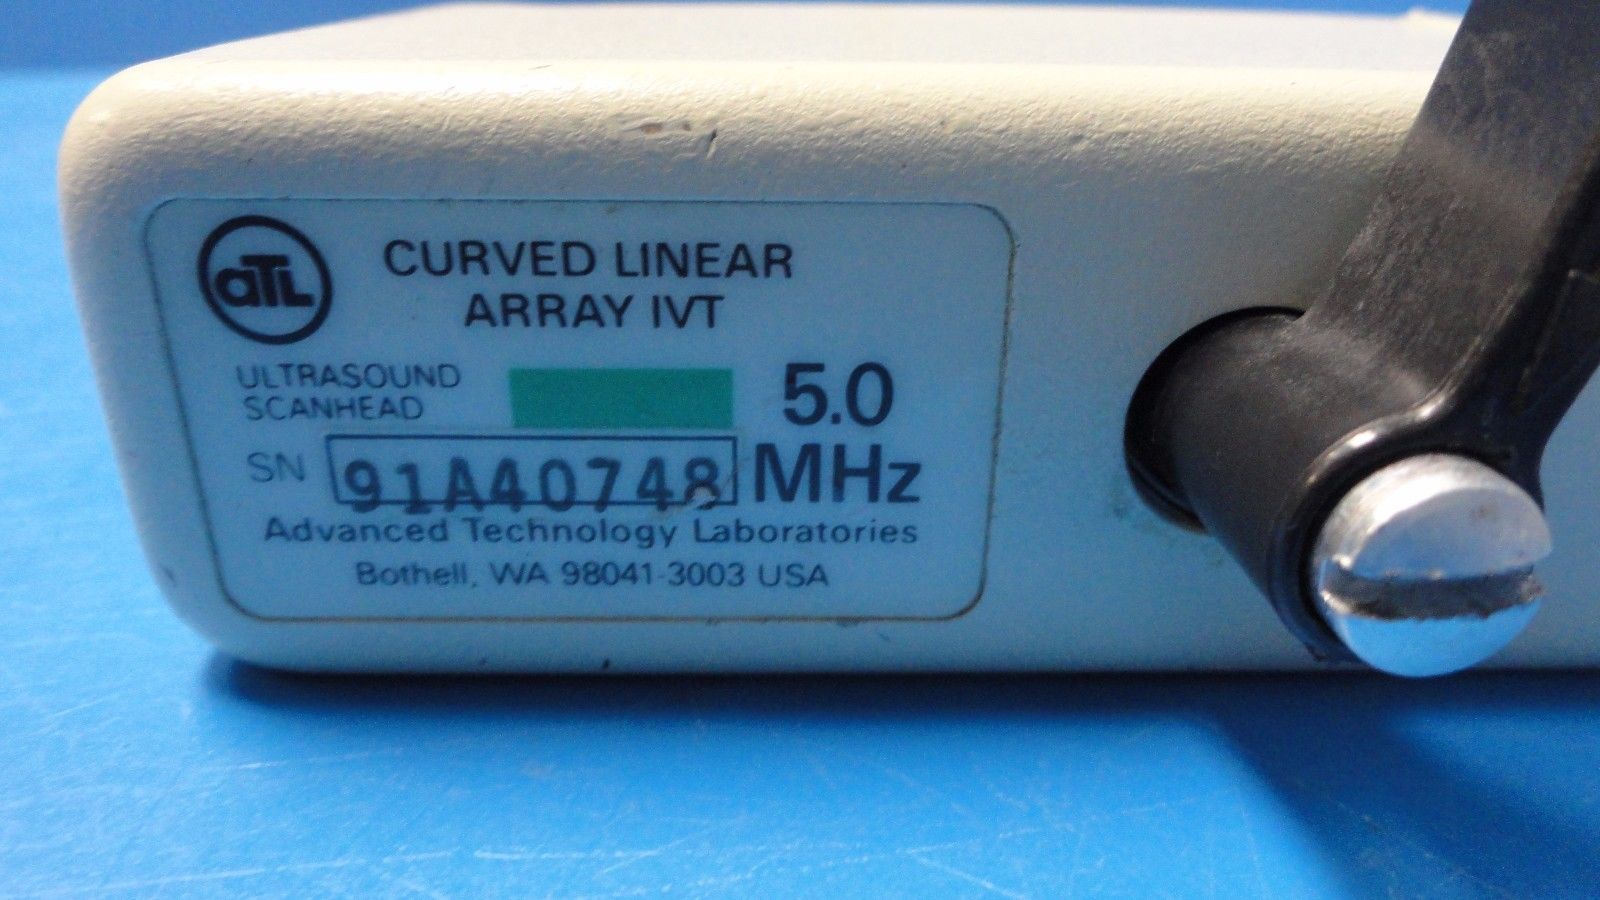 ATL CF 5.0 MHz Curved Linear Array IVT Transvaginal Probe for UM9, UM4+ (7079) DIAGNOSTIC ULTRASOUND MACHINES FOR SALE